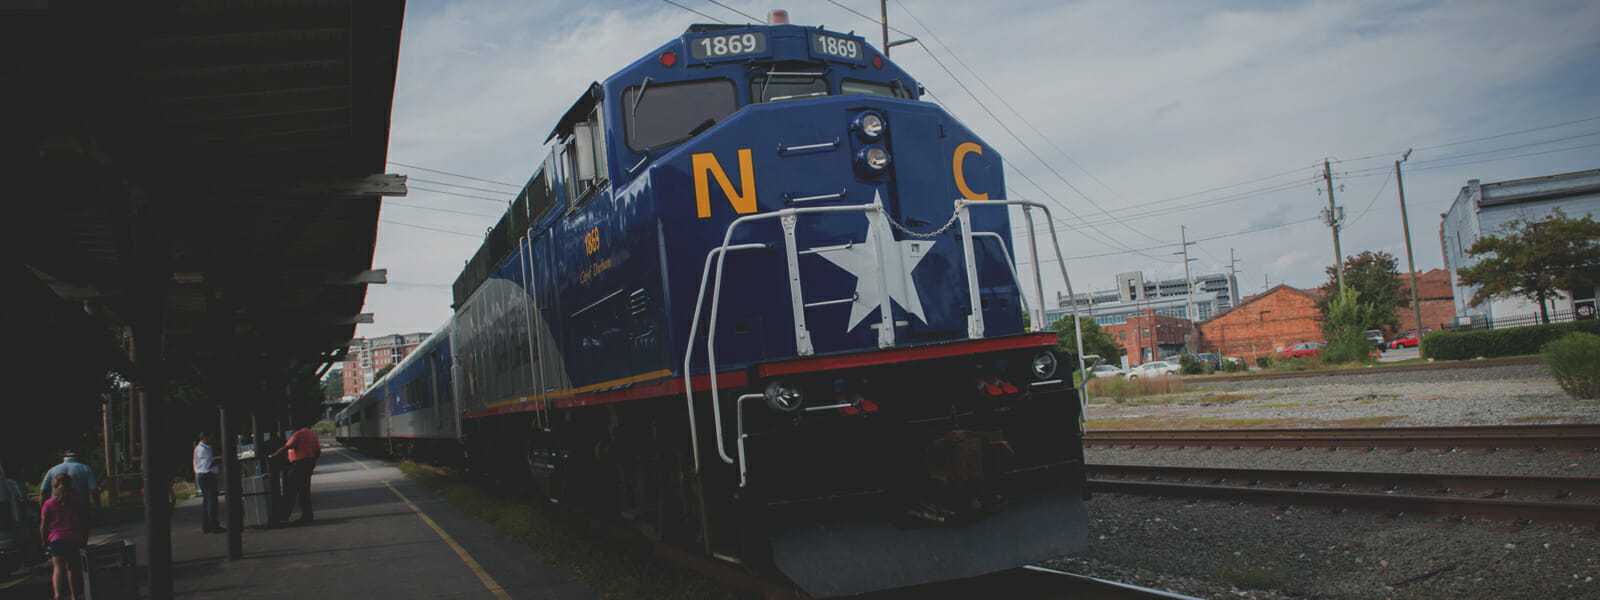 Railroad safety in North Carolina